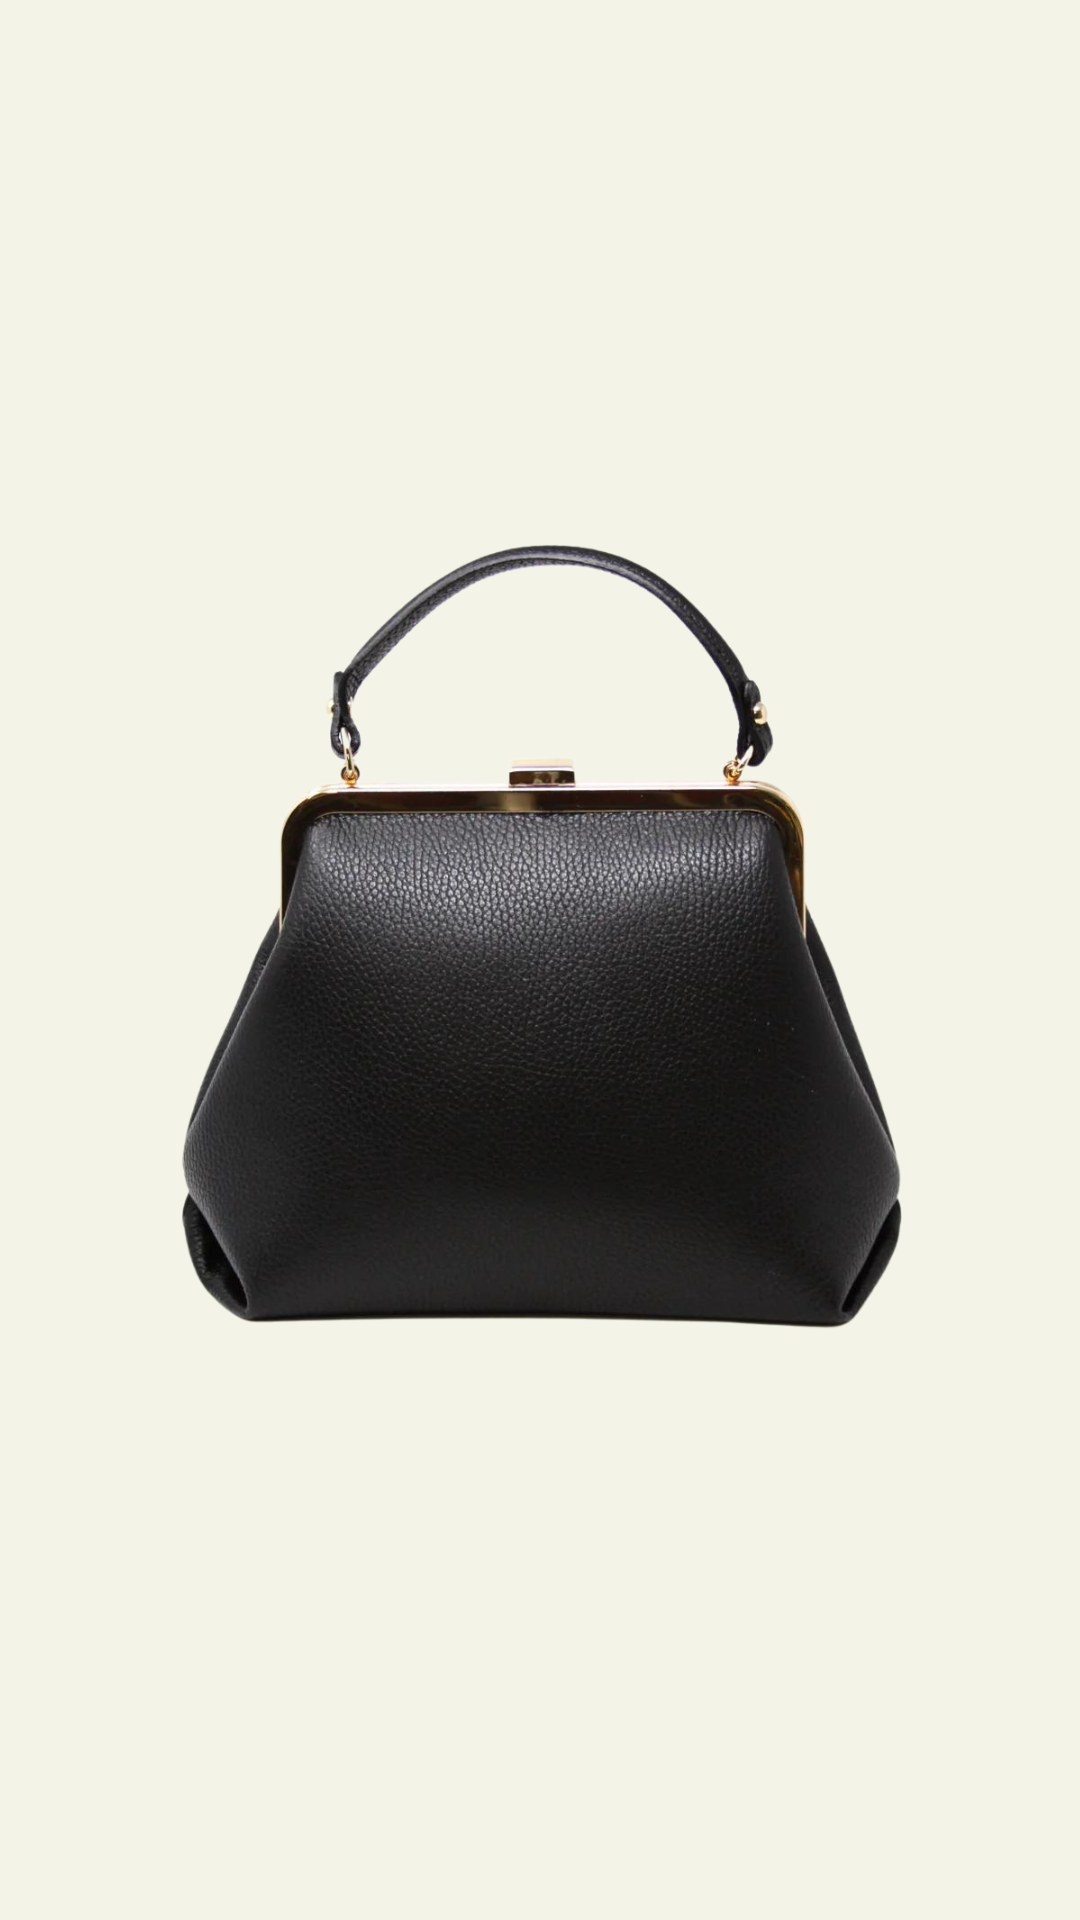 Parisian Leather Handbag